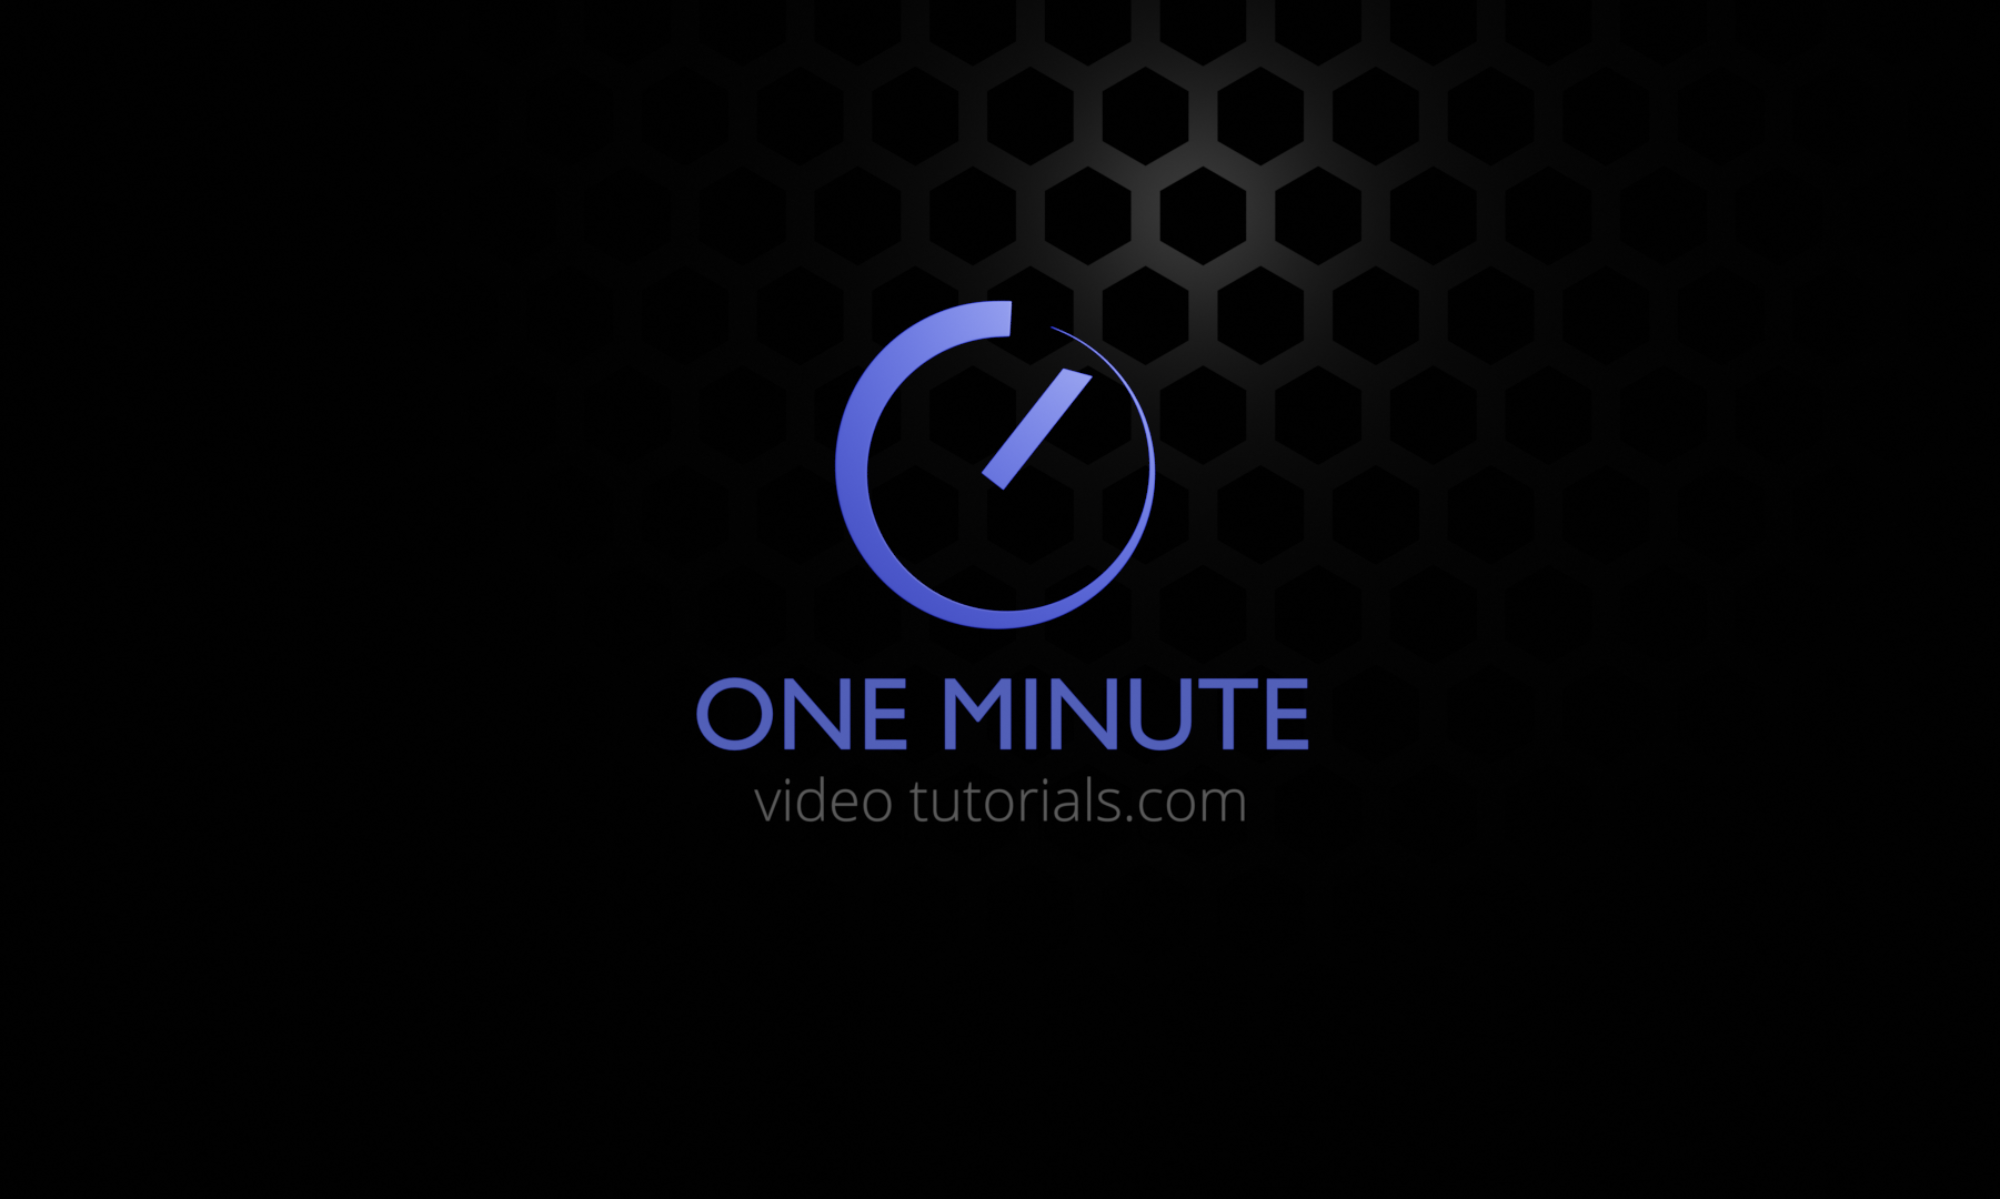 One Minute Video Tutorials